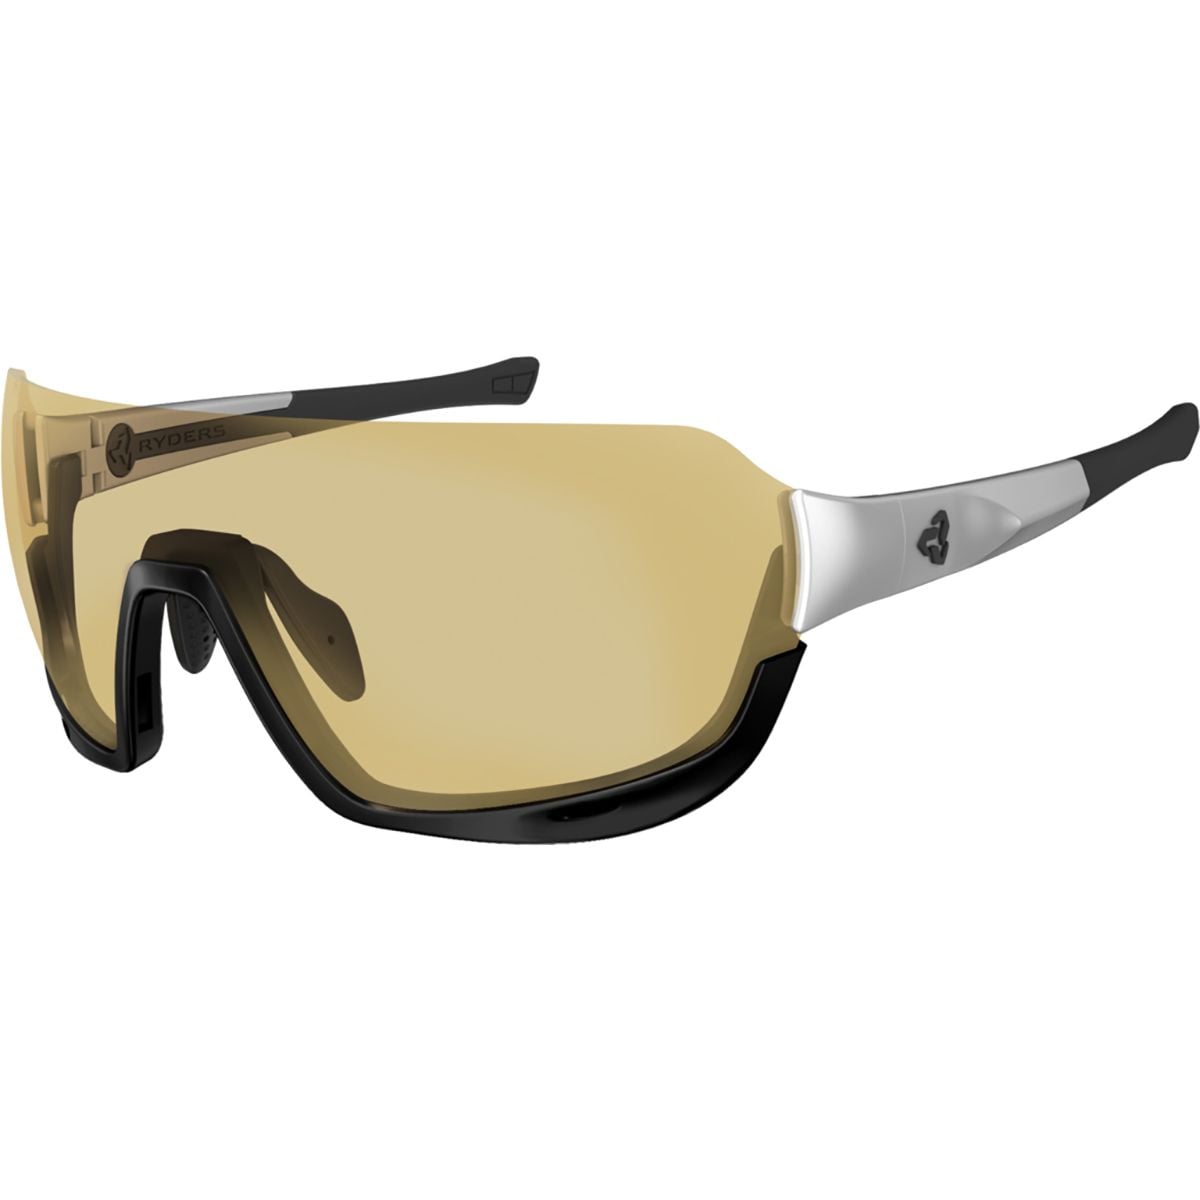 Ryders Eyewear Roam Photochromic Sunglasses - Women's